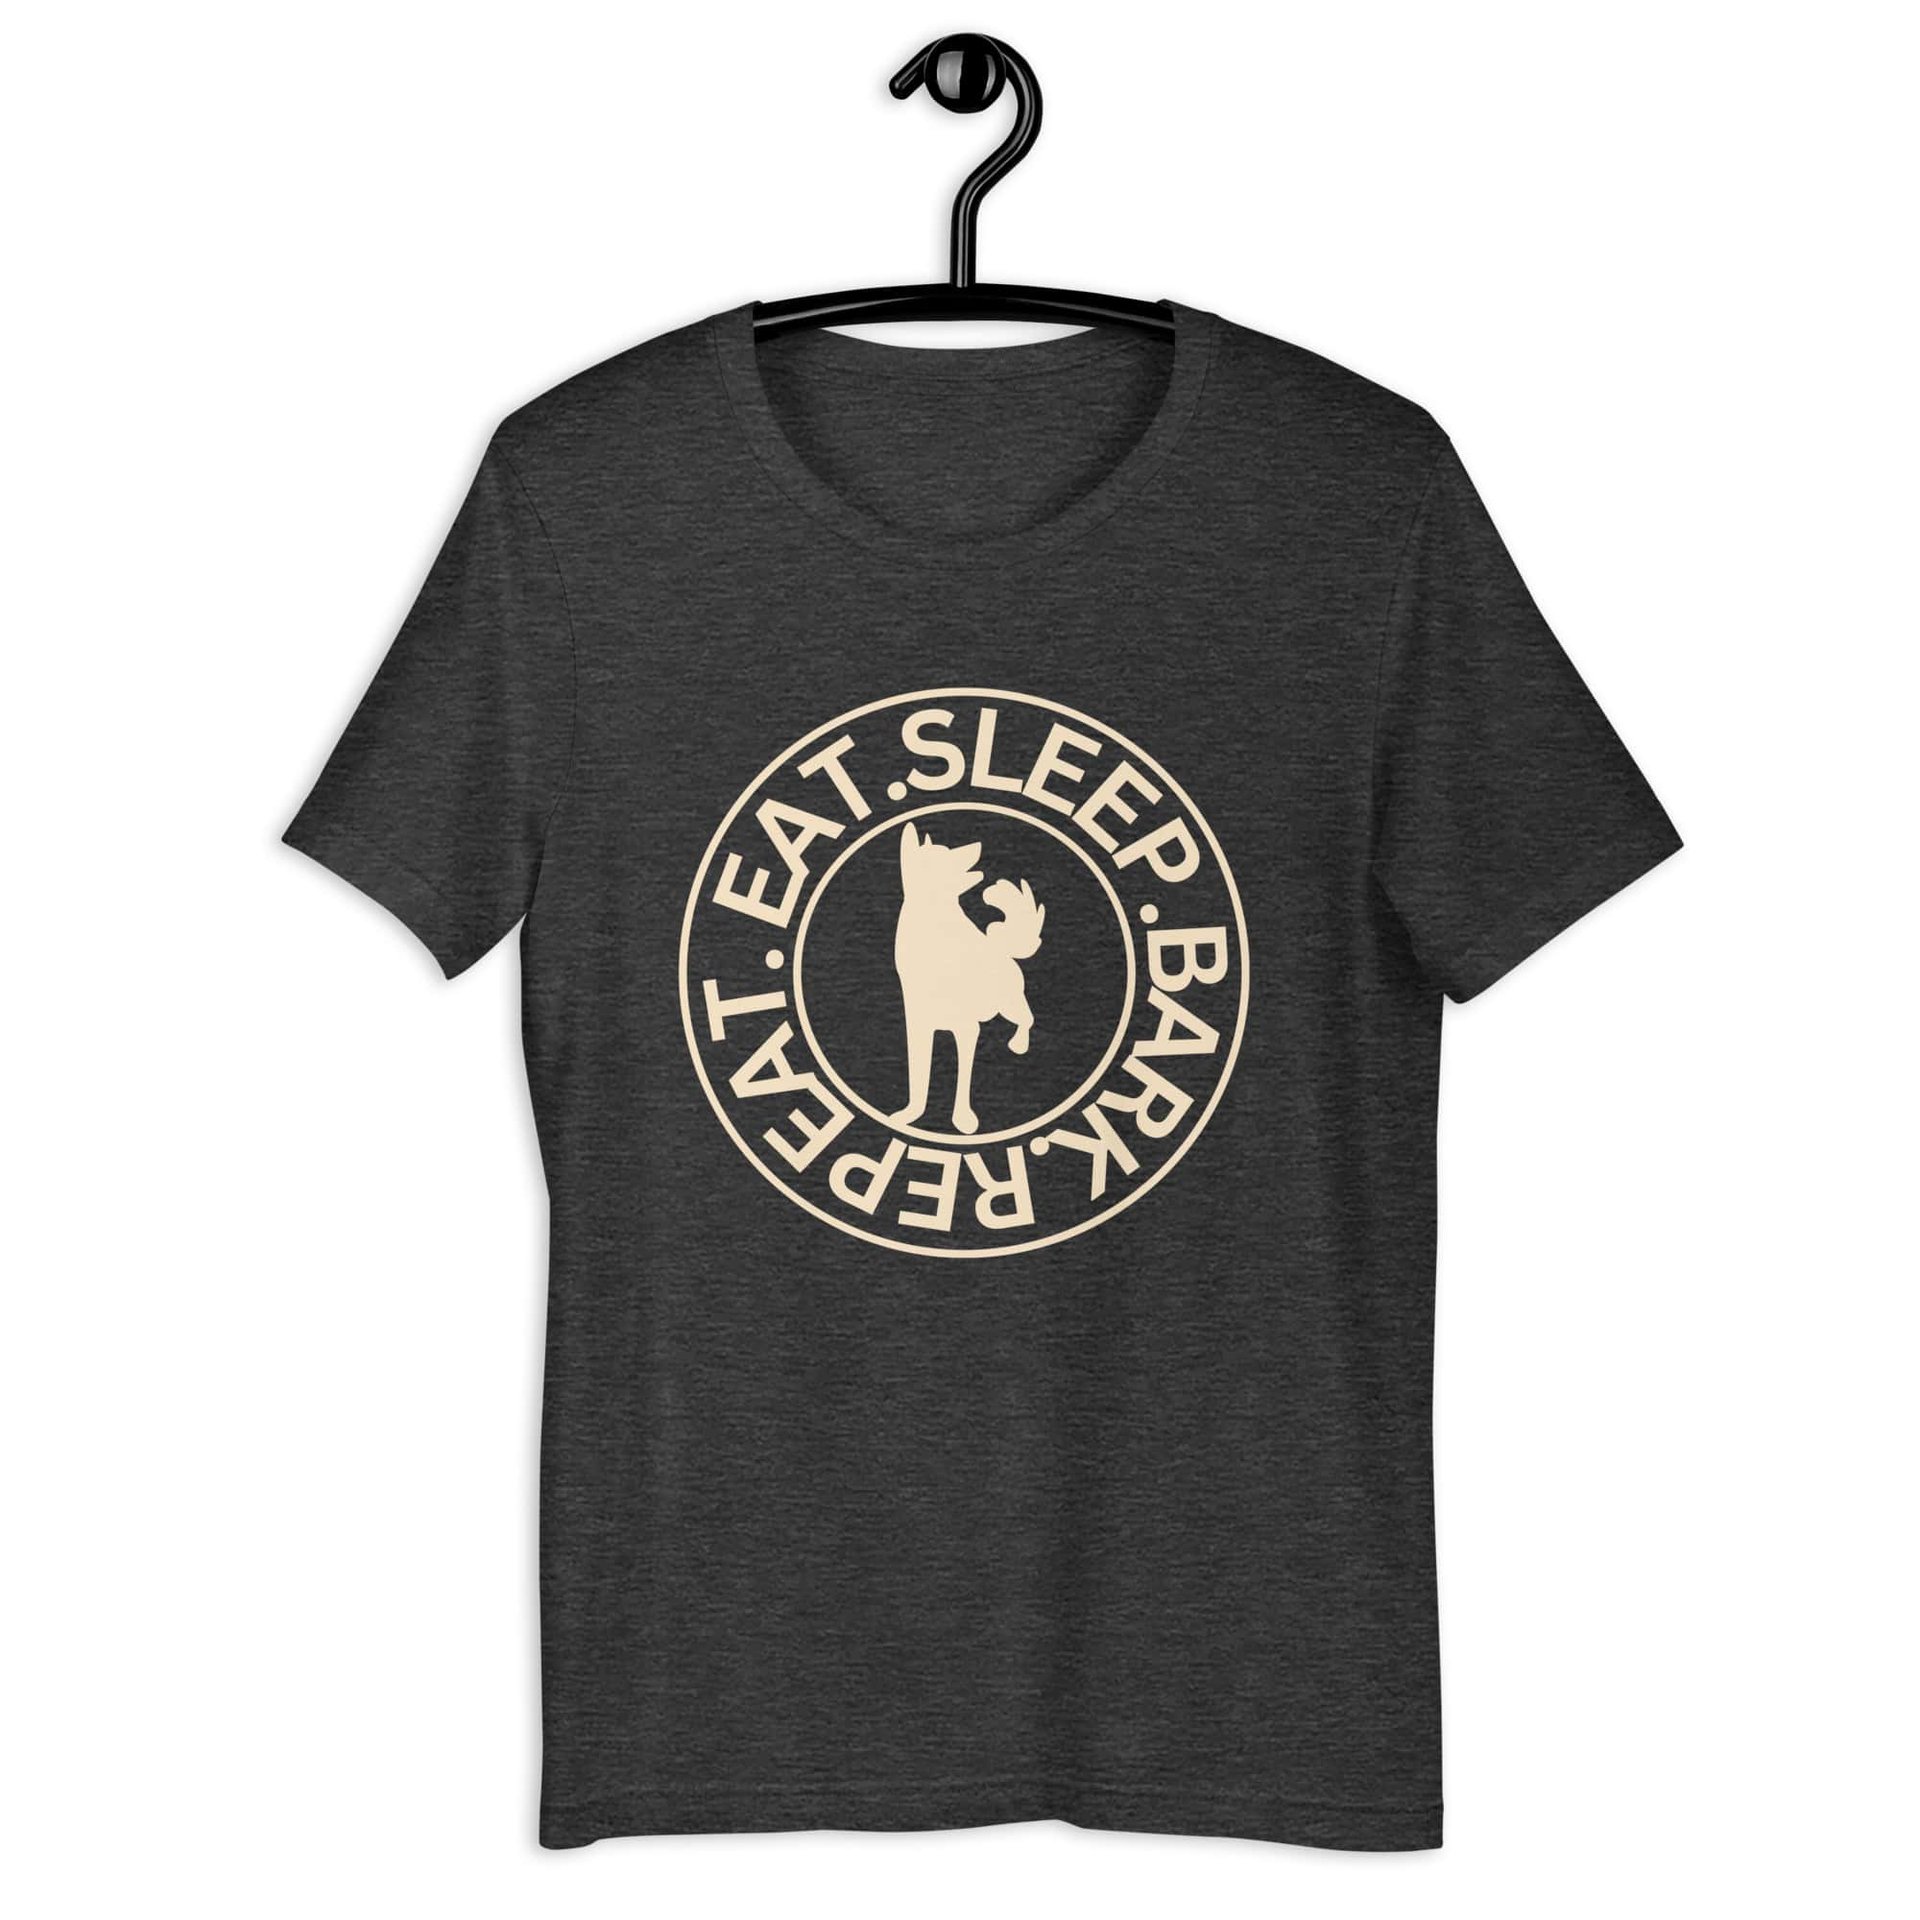 Eat Sleep Bark Repeat Shepherd Unisex T-Shirt. Dark Grey